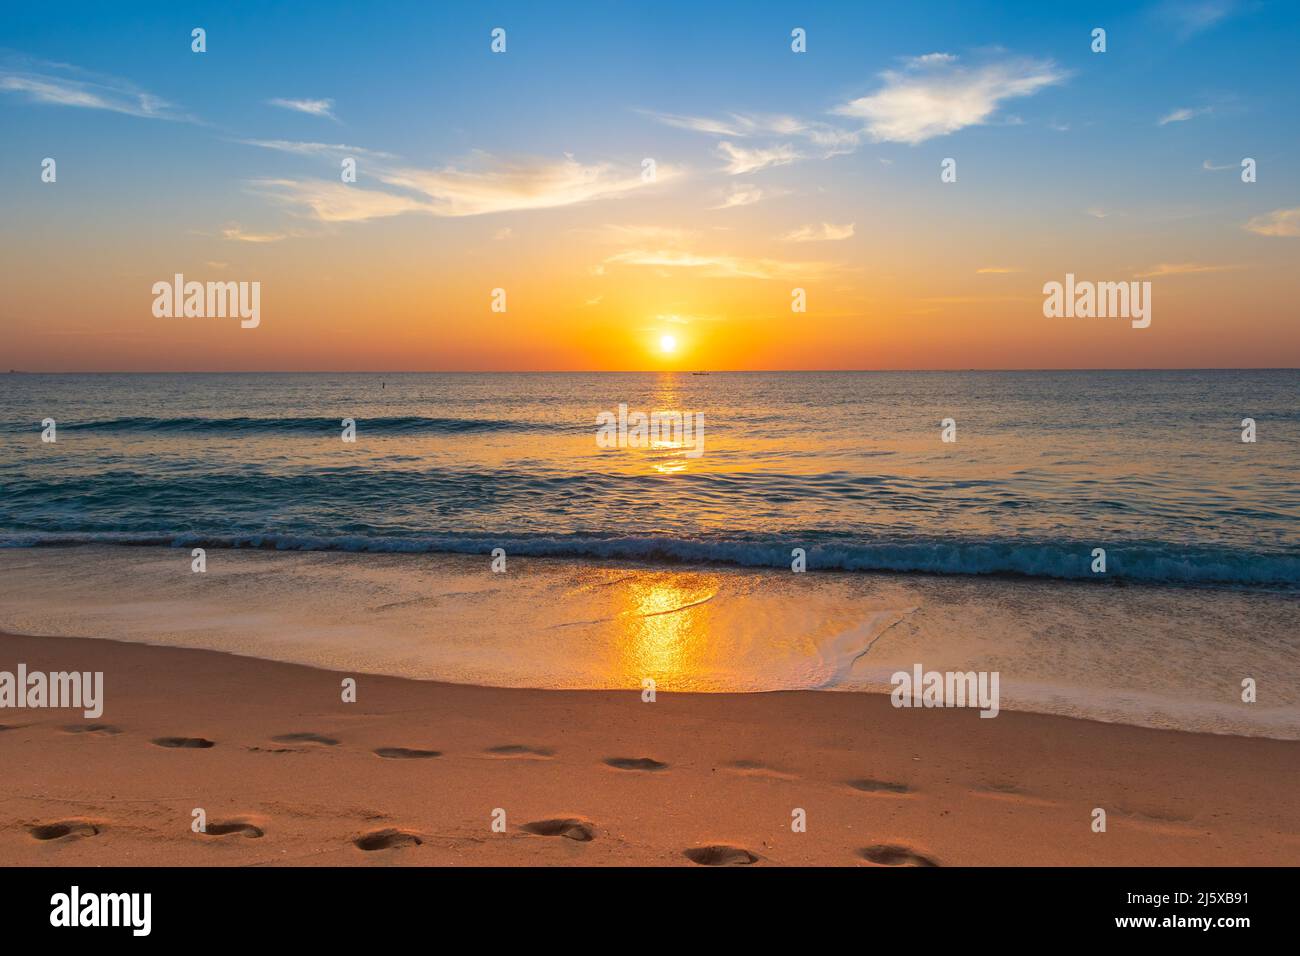 Stunning sunrise and beach landscape. Stock Photo